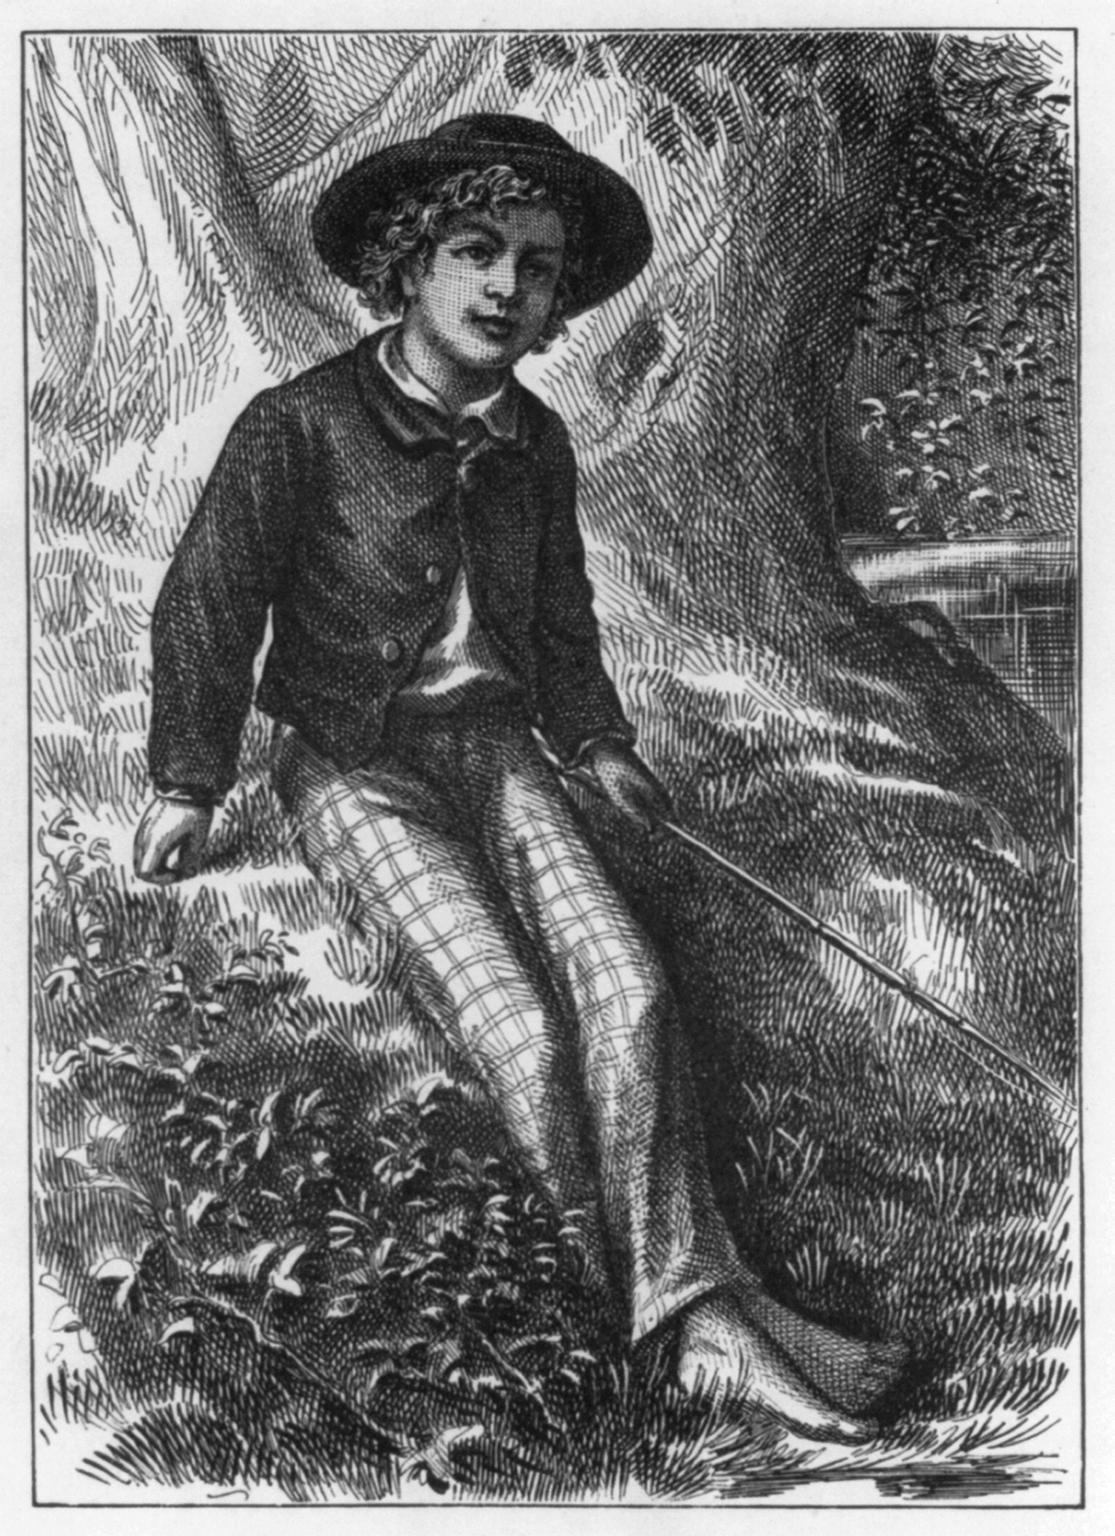 Tom Sawyer - 1876 illustration by True Williams